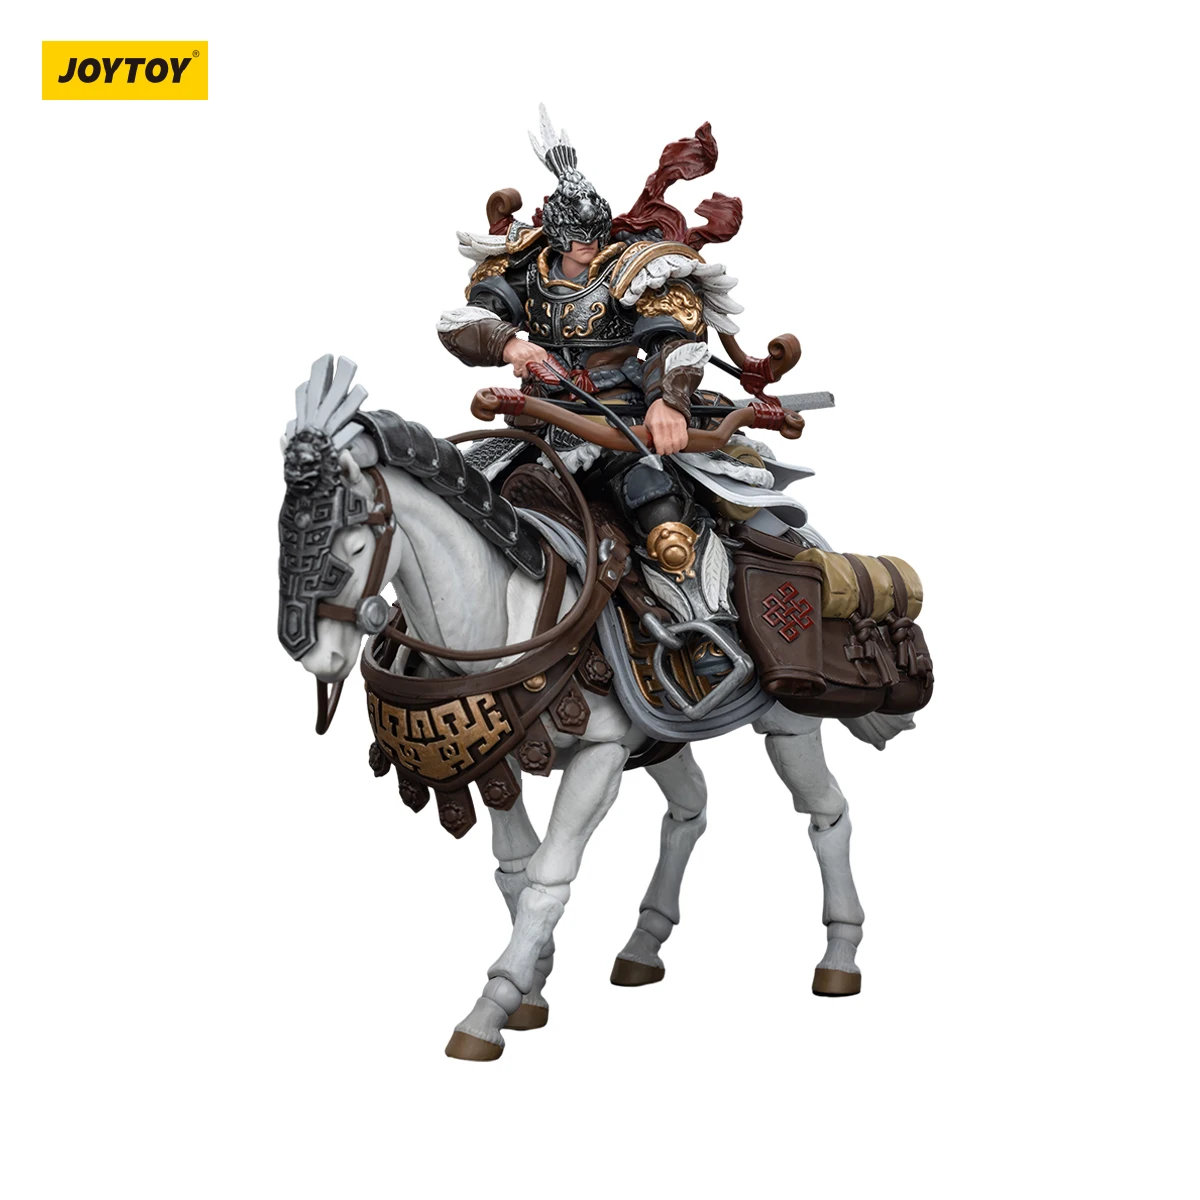 

JOYTOY 1/18 Action Figures 10.8cm Anime Dark Source JiangHu Northern Hanland Empire White Feather Snowfield Archery Cavalry